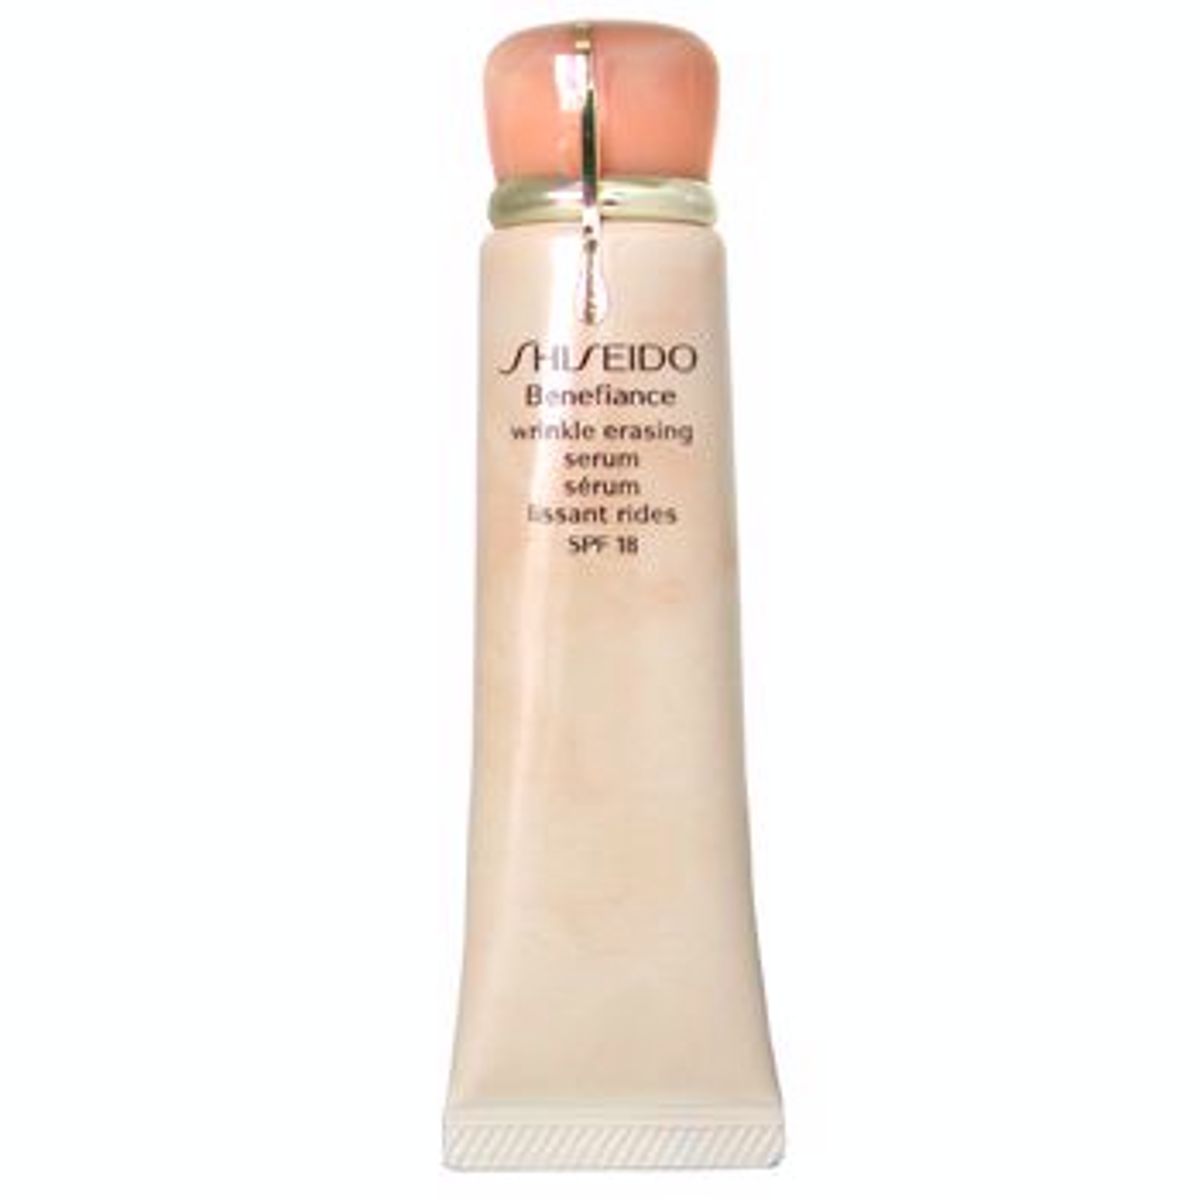 Benefiance Wrinkle Erasing Serum SPF 18 Shiseido Image